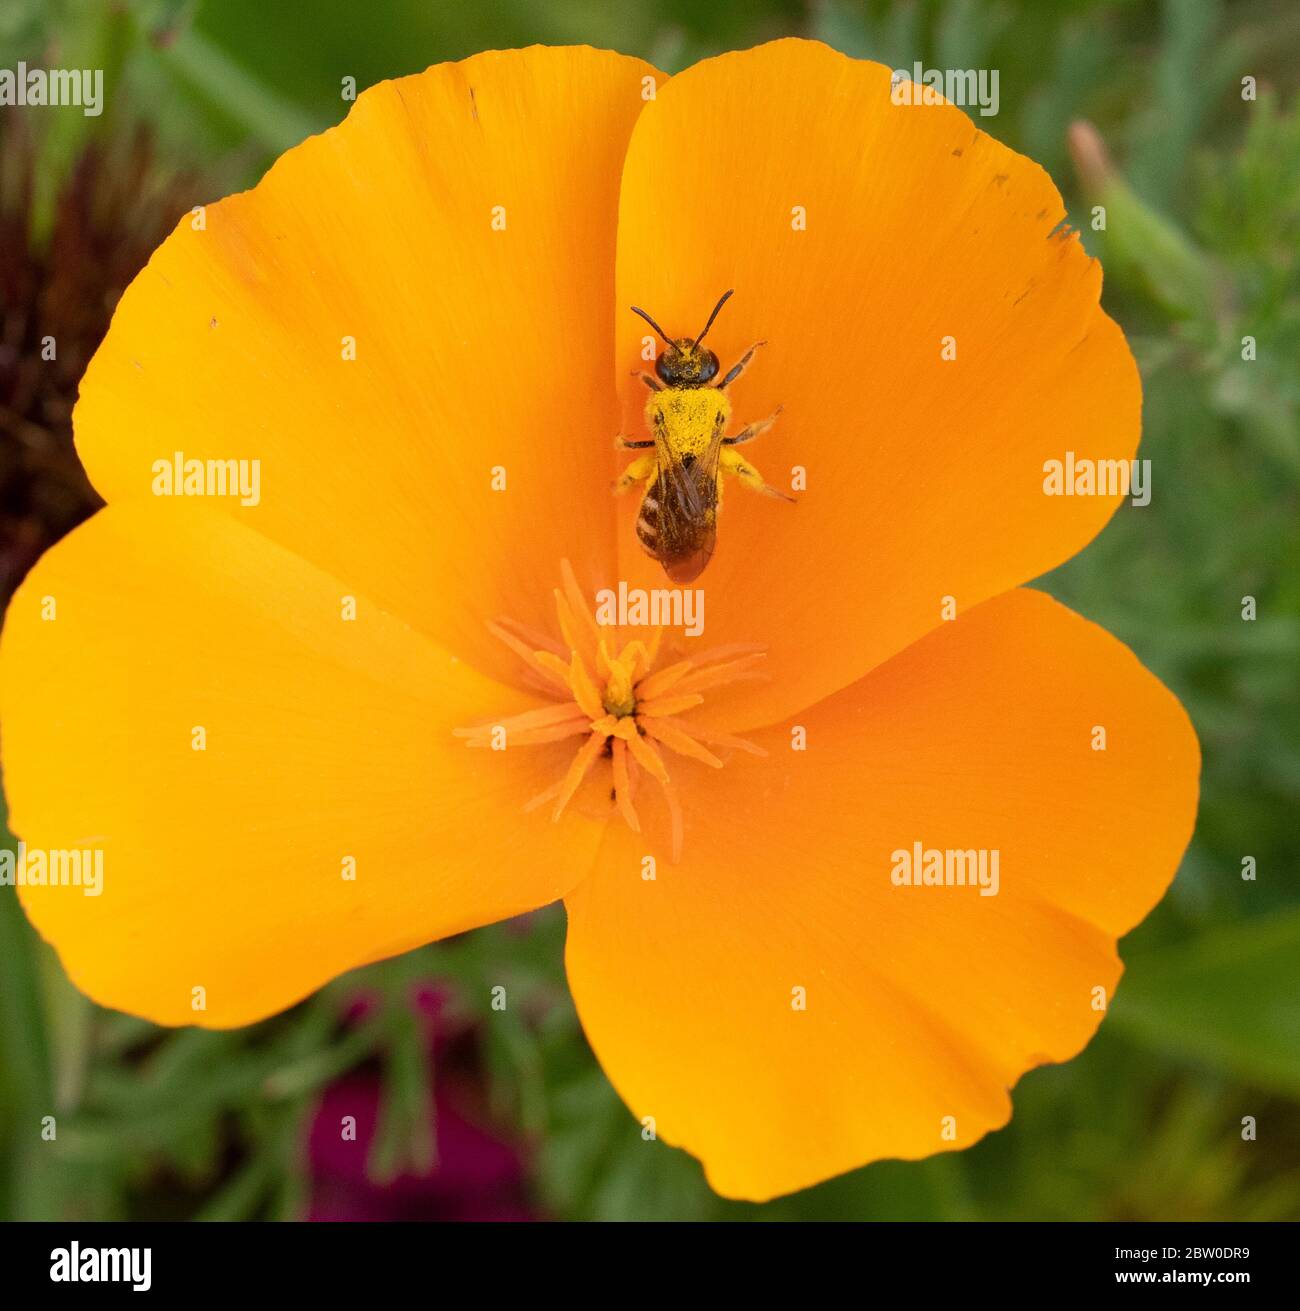 Sweat Bee (Lasioglossum) on California Poppy flower, Oregon Stock Photo